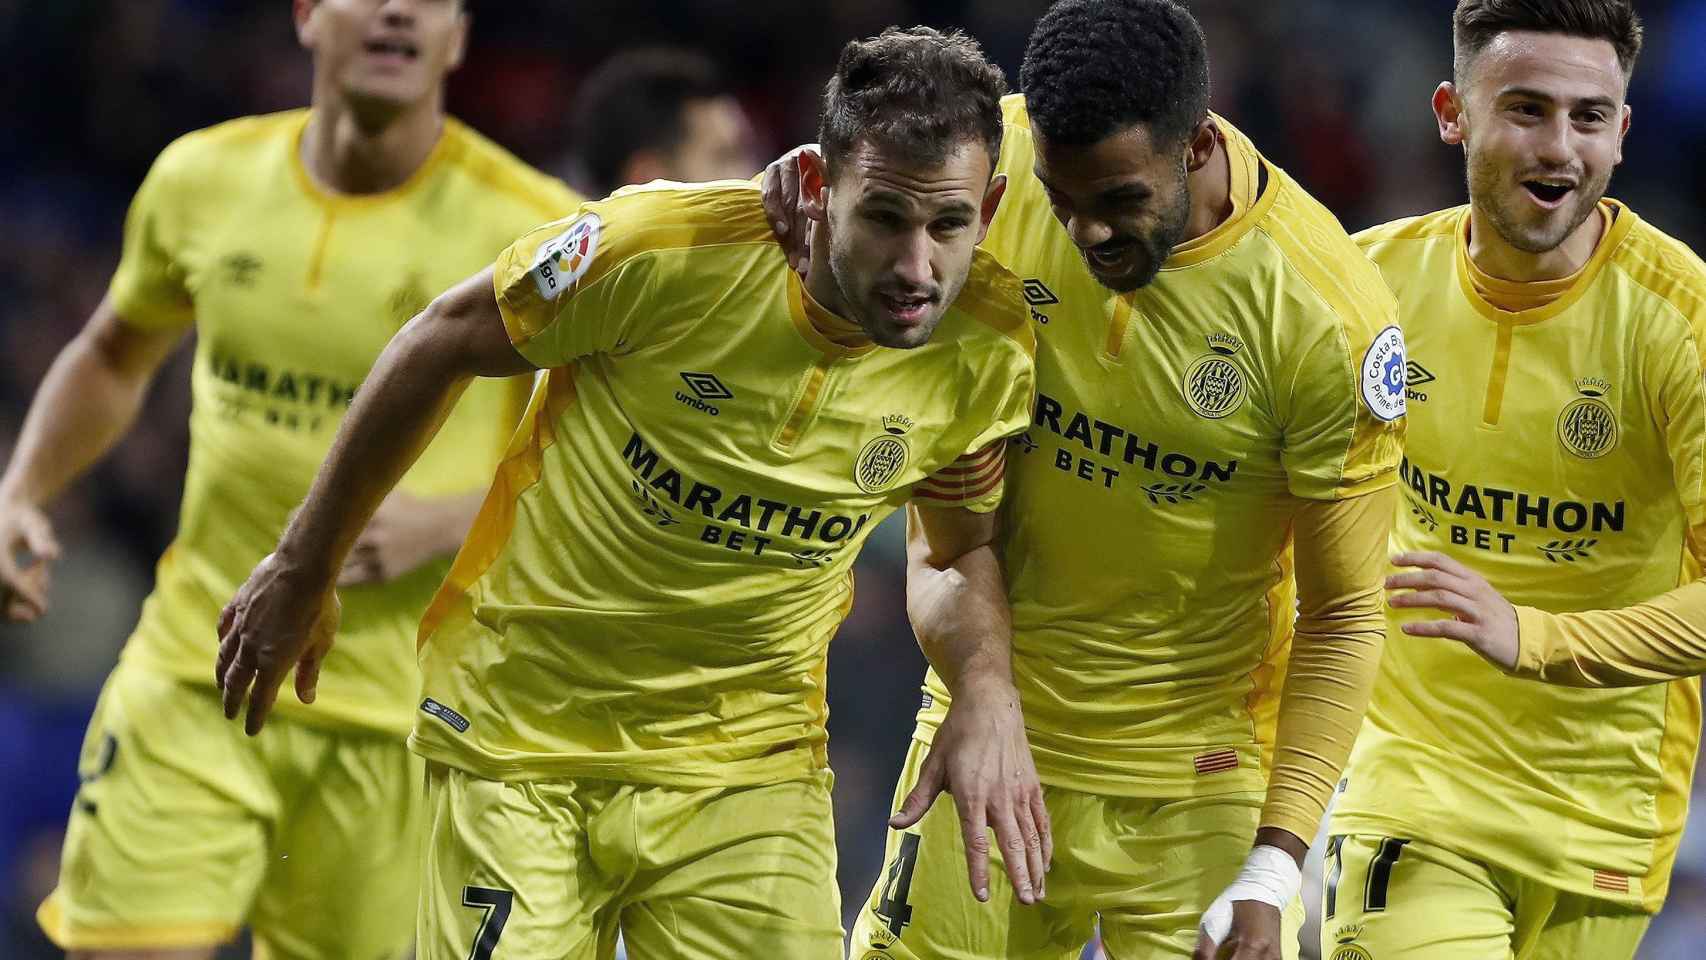 Stuani celebra un gol ante el Espanyol.